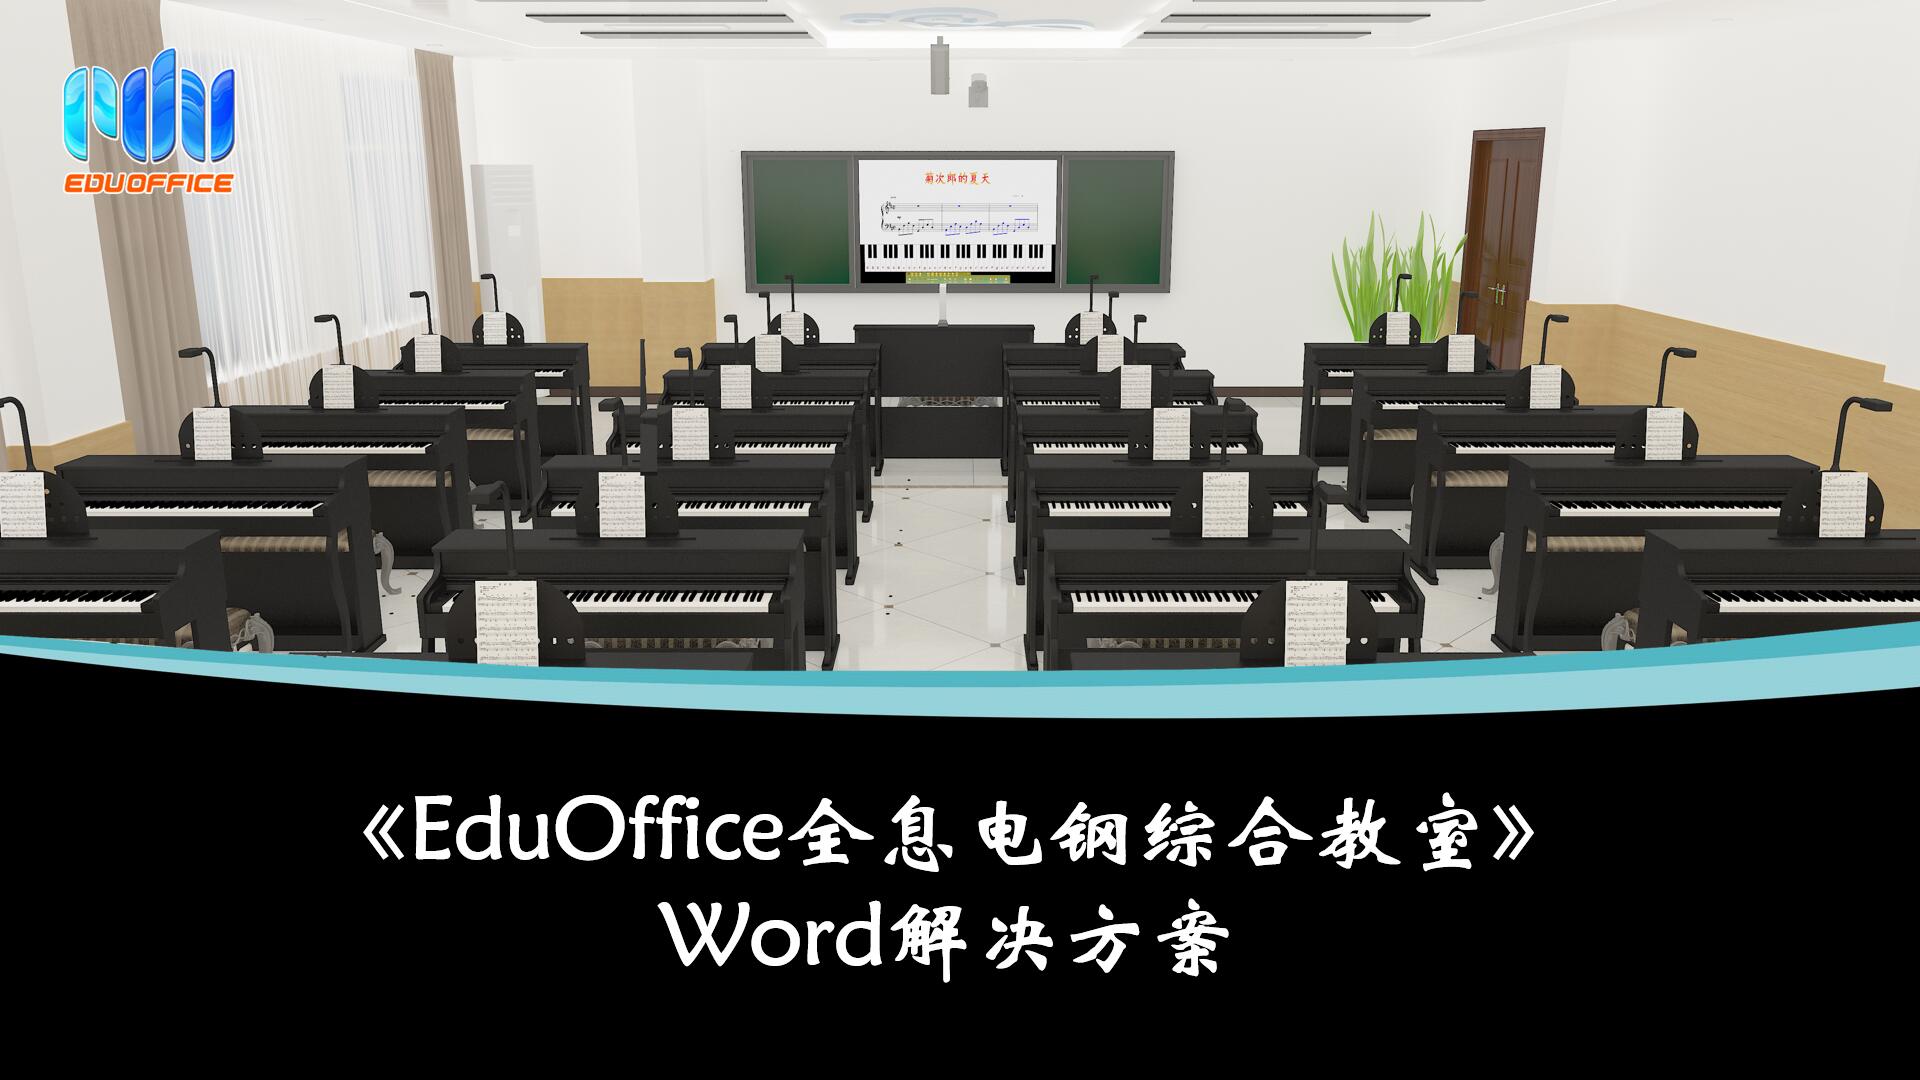 EduOffice全息电钢综合-解决方案